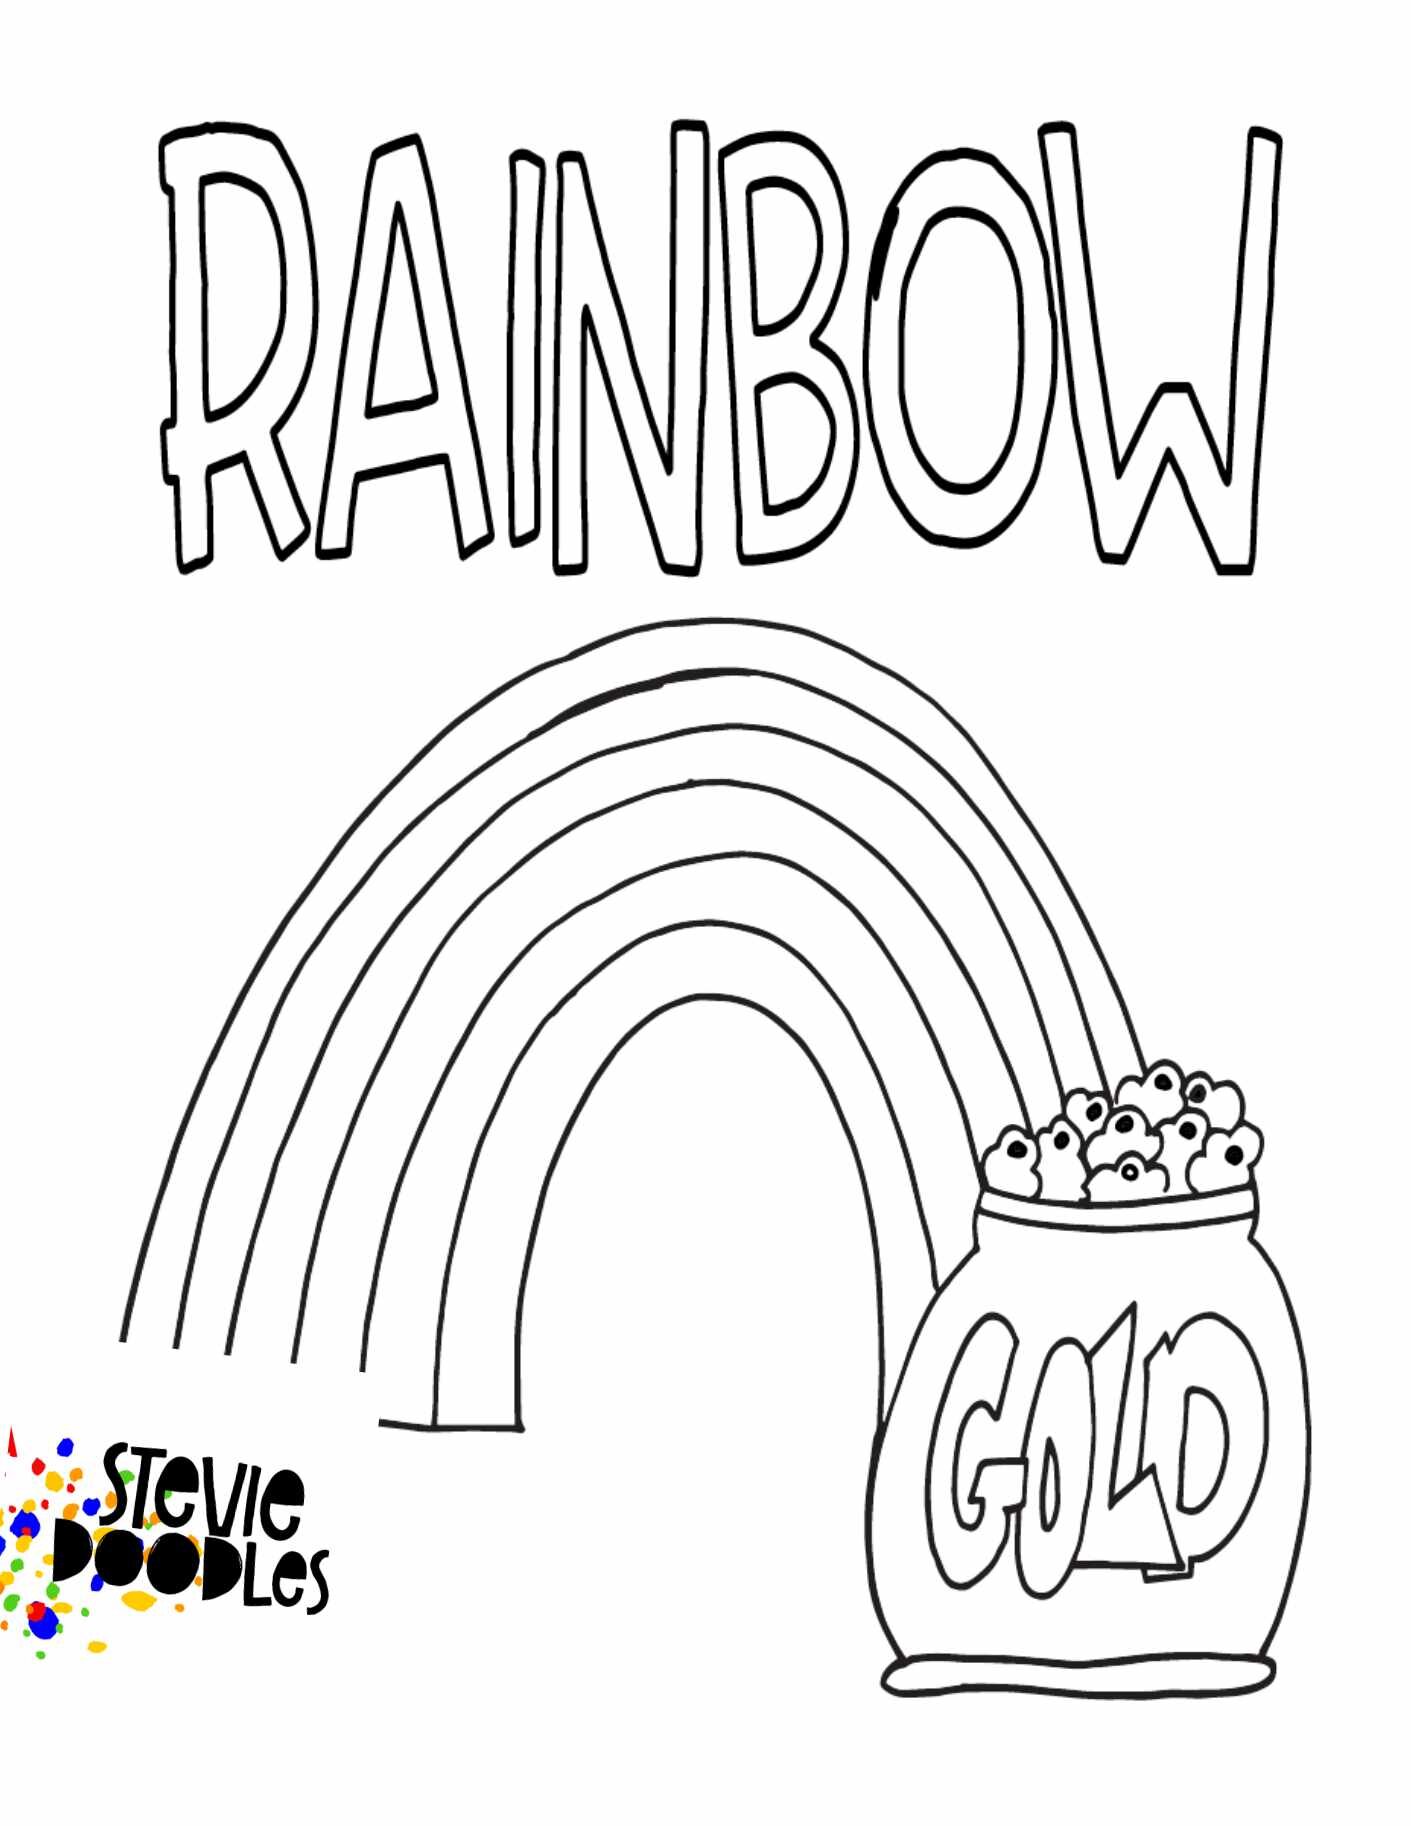 Rainbow With Gold_Stevie Doodles.jpg